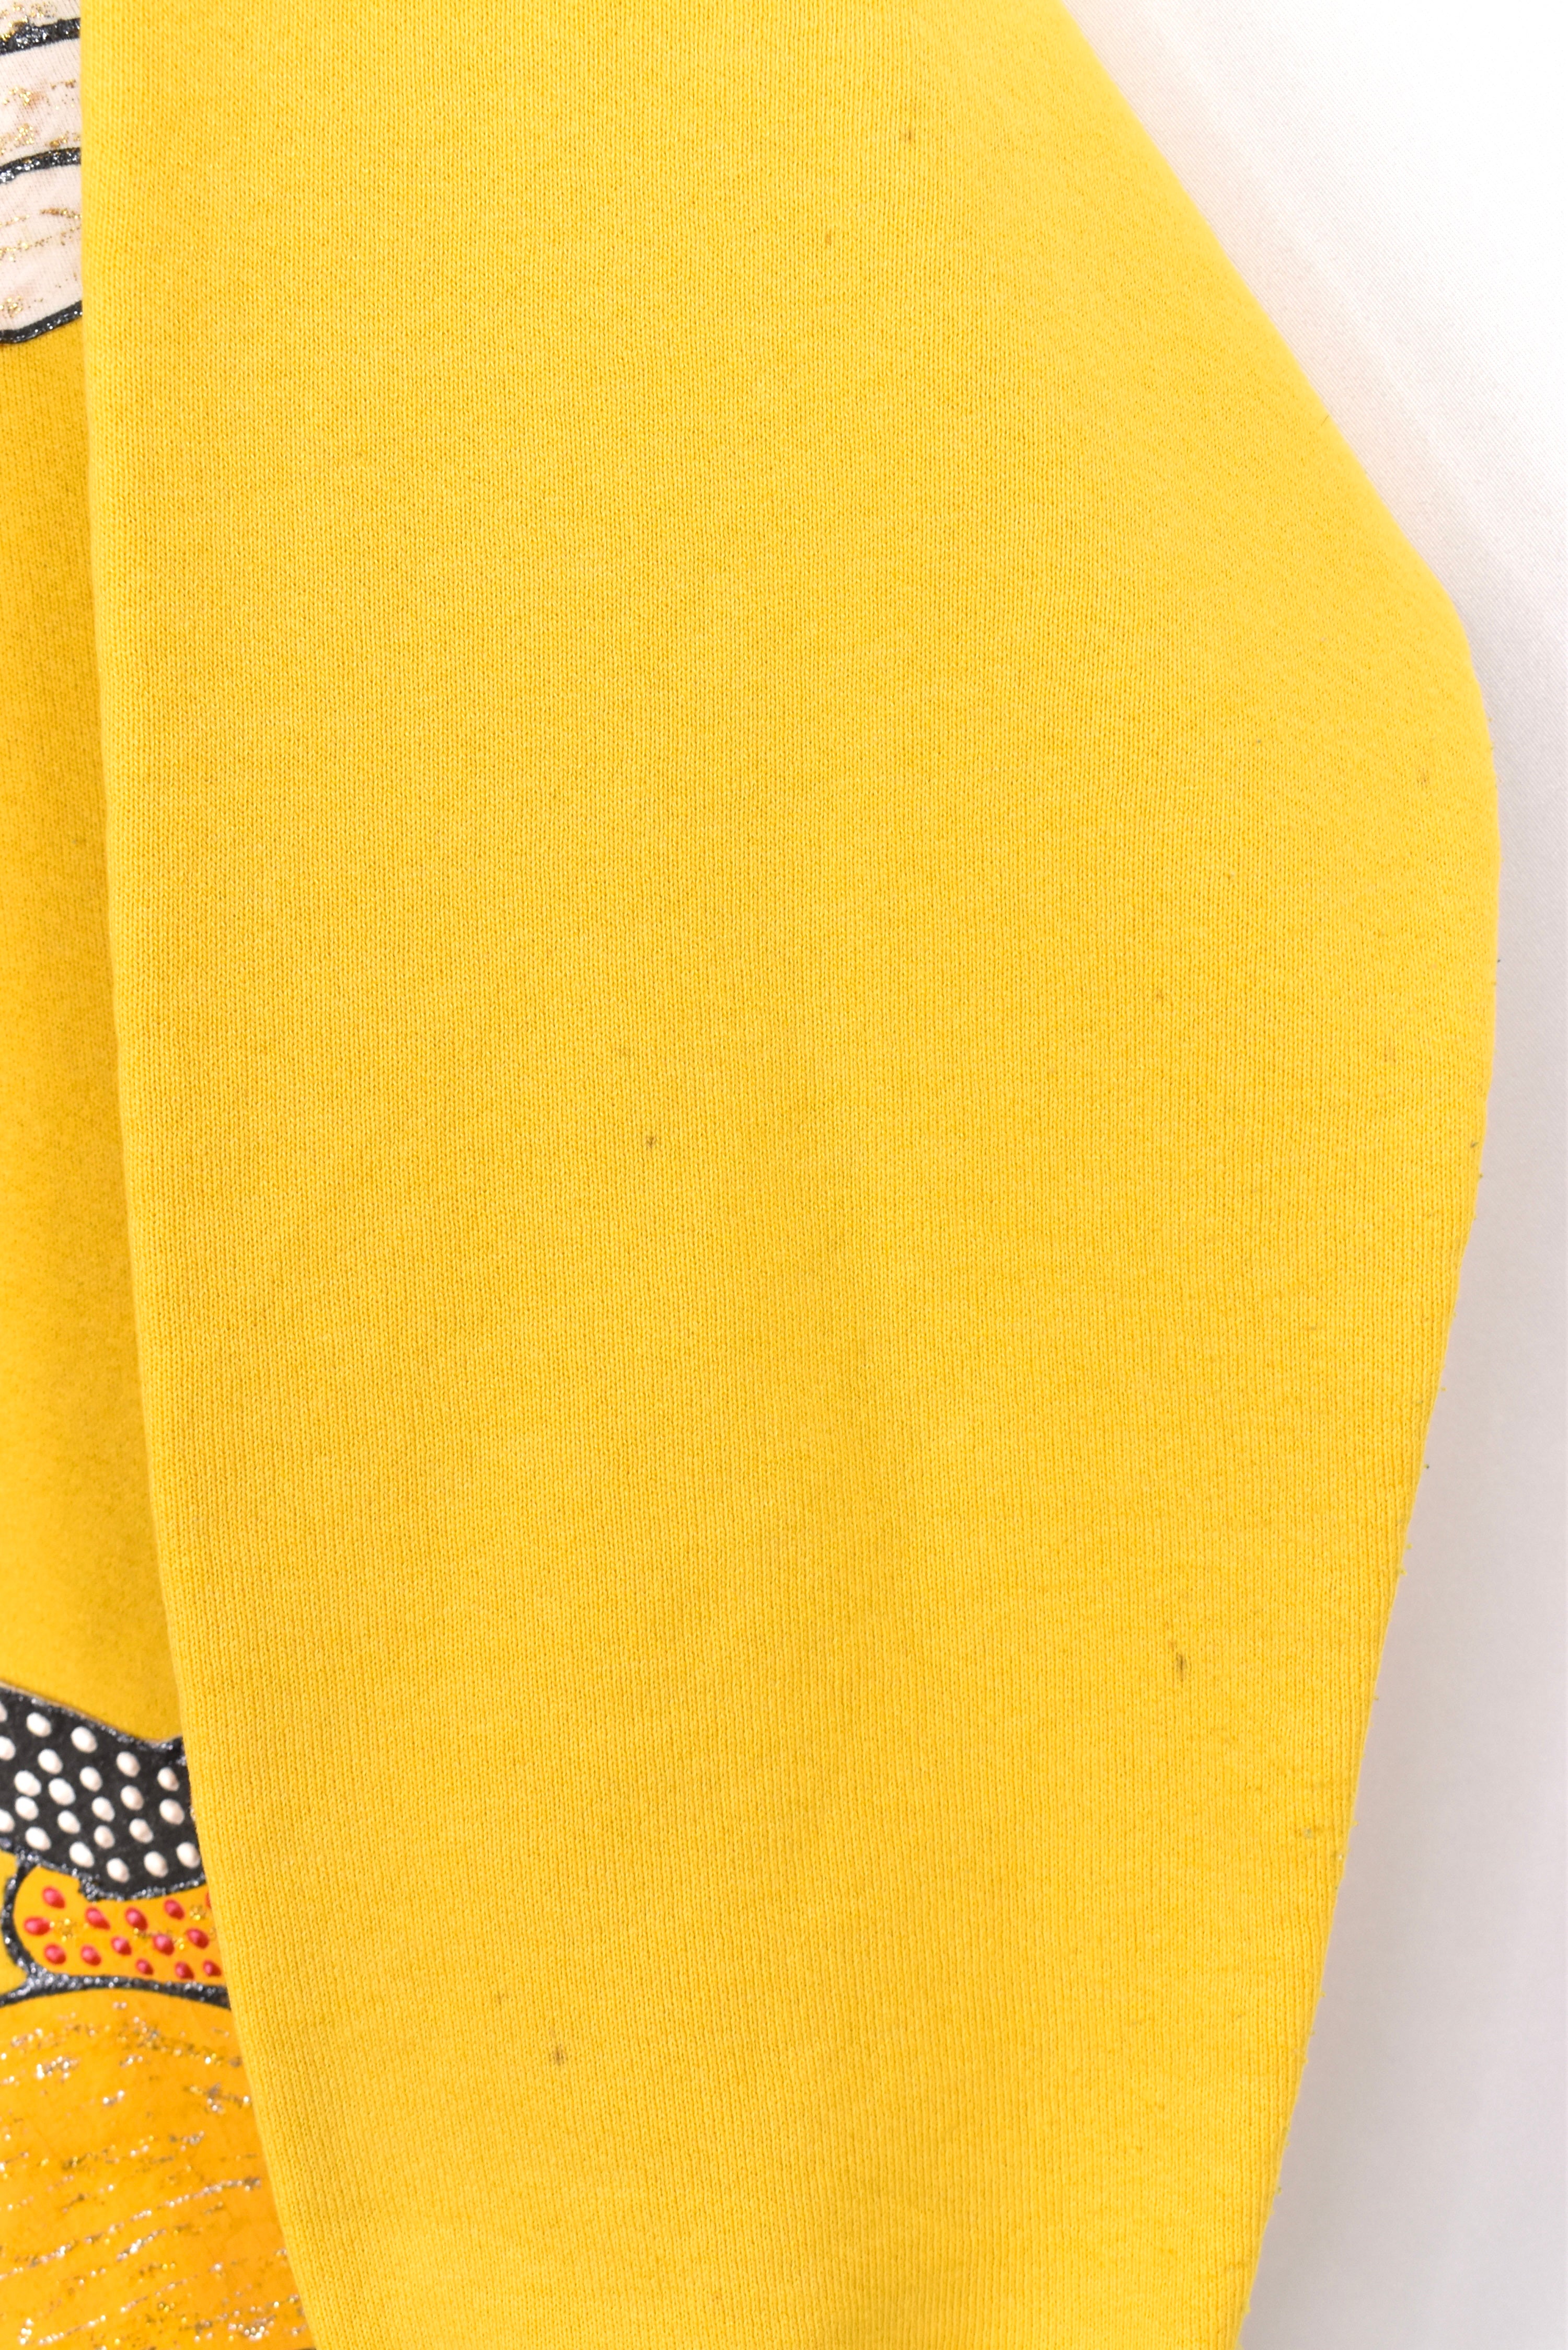 Custom Mickey Mouse sweatshirt, yellow graphic crewneck - AU S DISNEY / CARTOON